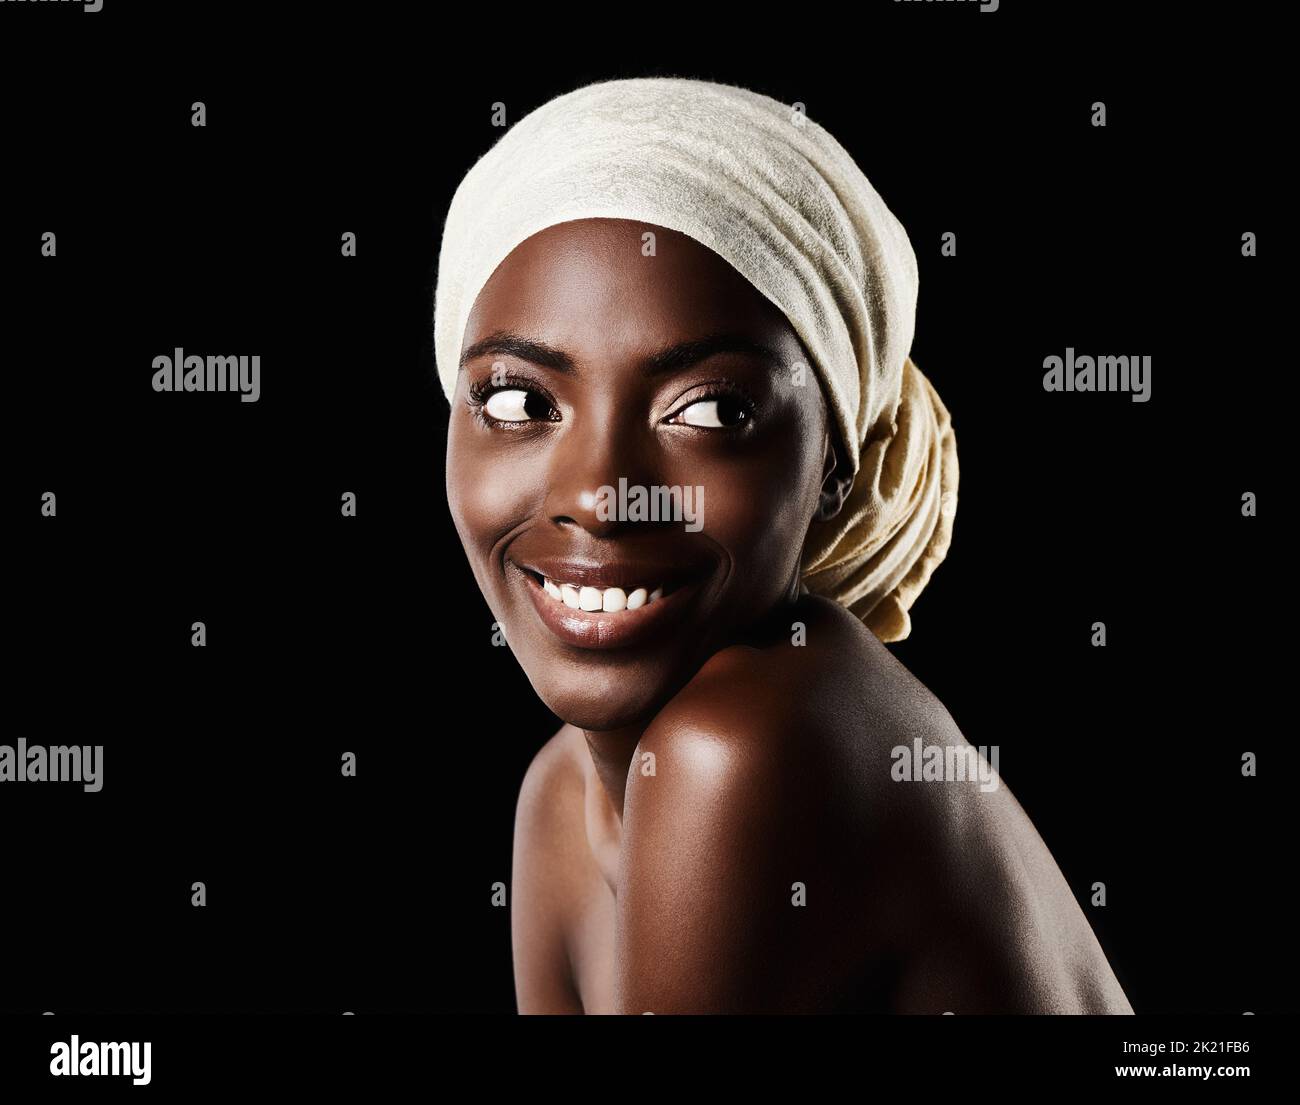 Beautiful skin. Studio portrait of a beautiful woman wearing a headscarf against a black background. Stock Photo